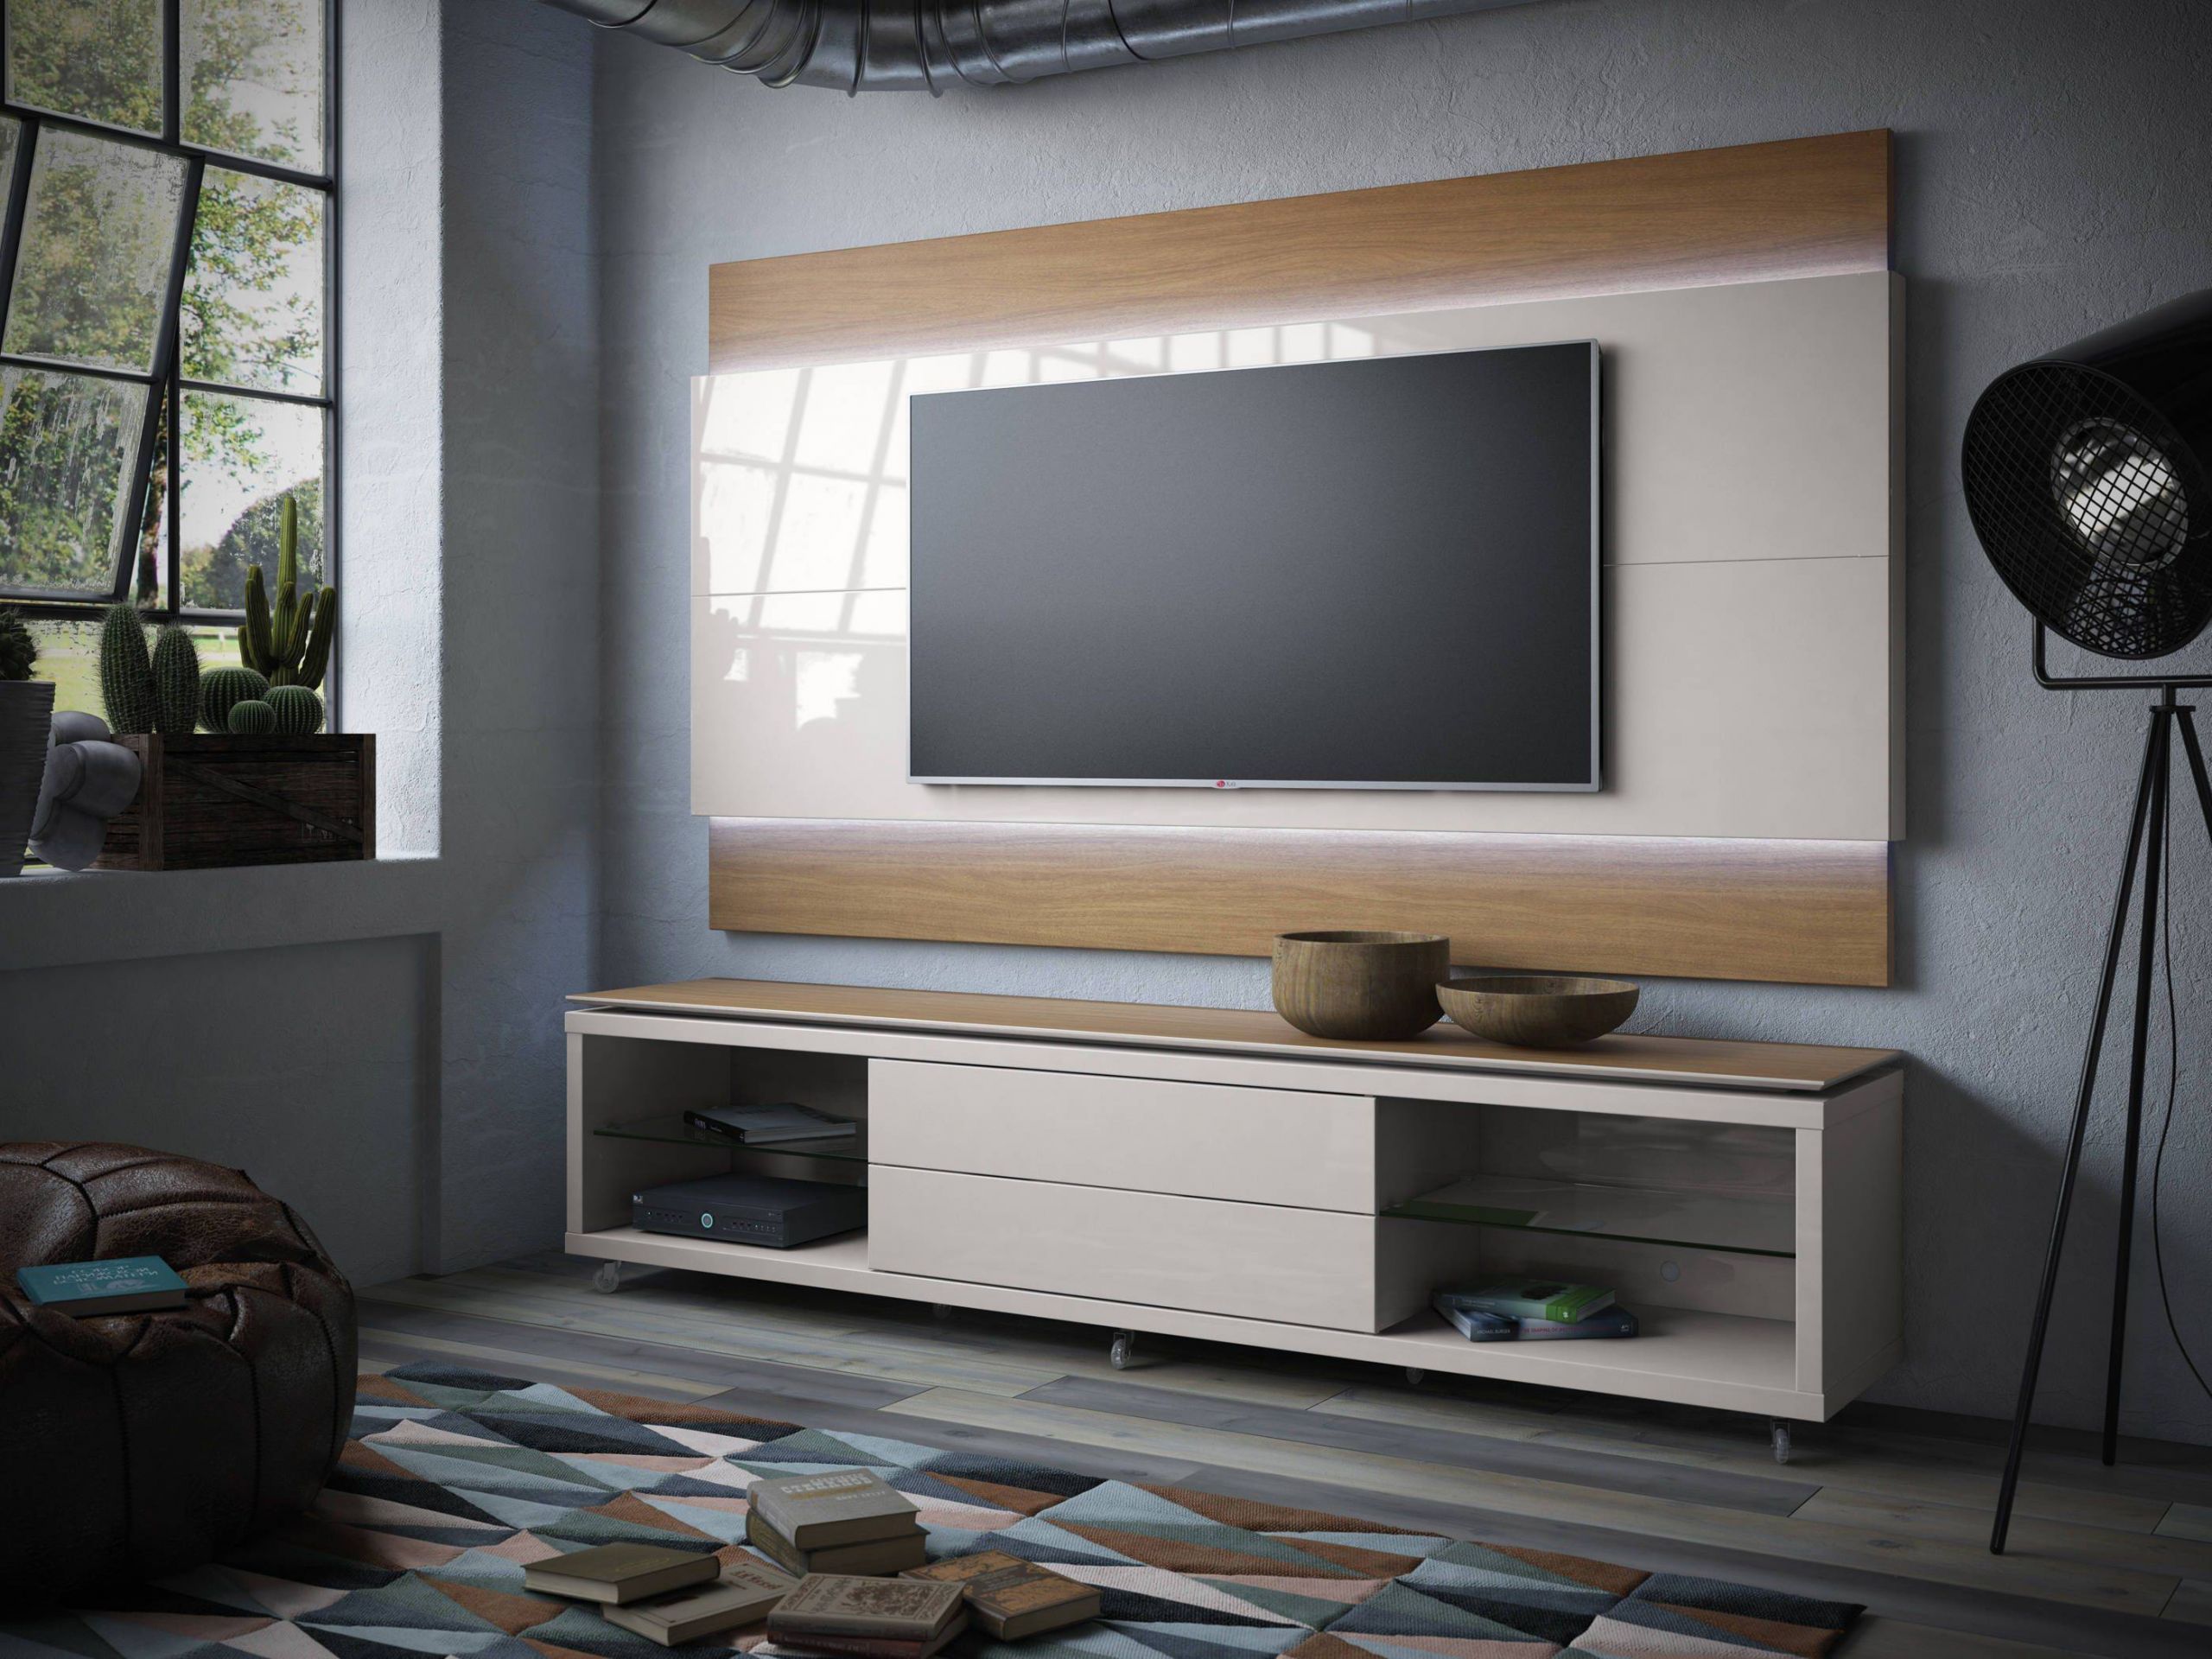 Inspirational Sleek Tv Unit Design for Living Room – Home Design